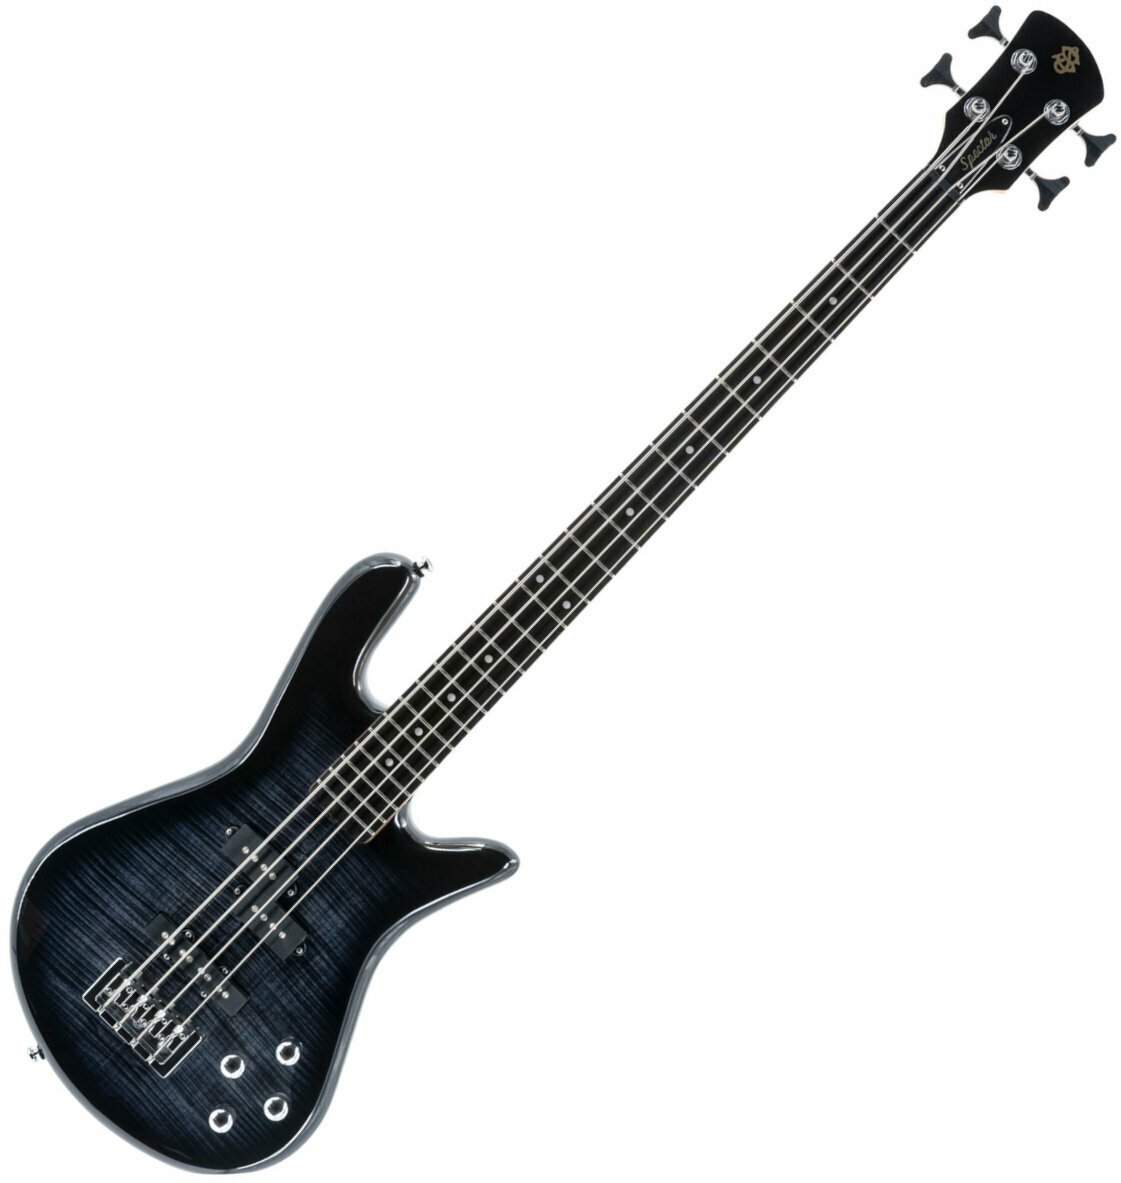 Elektrická baskytara Spector Legend Standard 4 Black Stain Gloss (Zánovní)